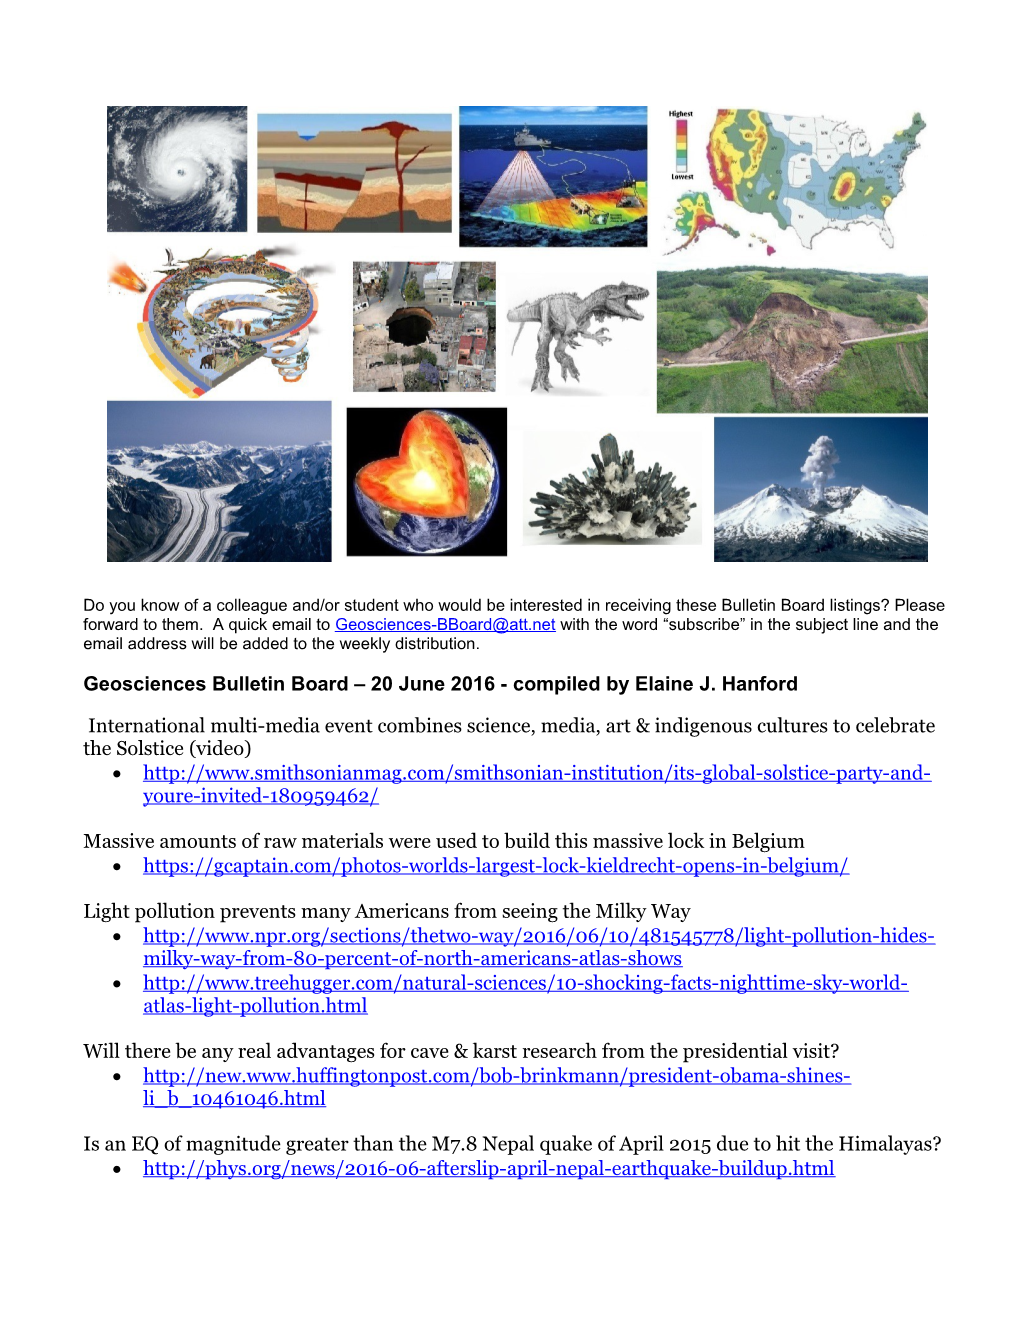 Geosciences Bulletin Board 20 June 2016- Compiled by Elaine J. Hanford